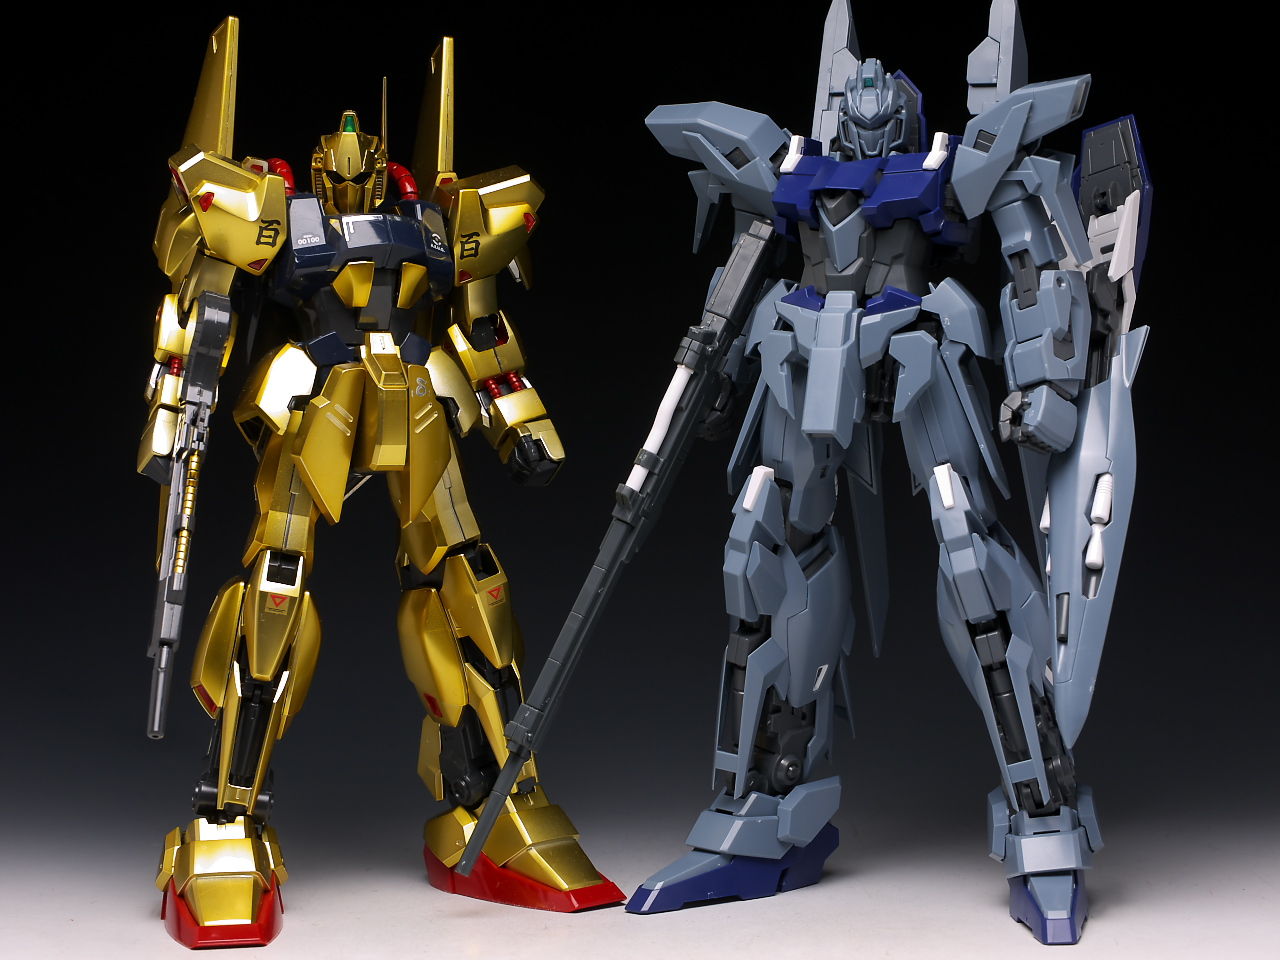 Details about   Gundam MSN-001A1 DELTA Plus GK Conversion Kits MG 1/100 